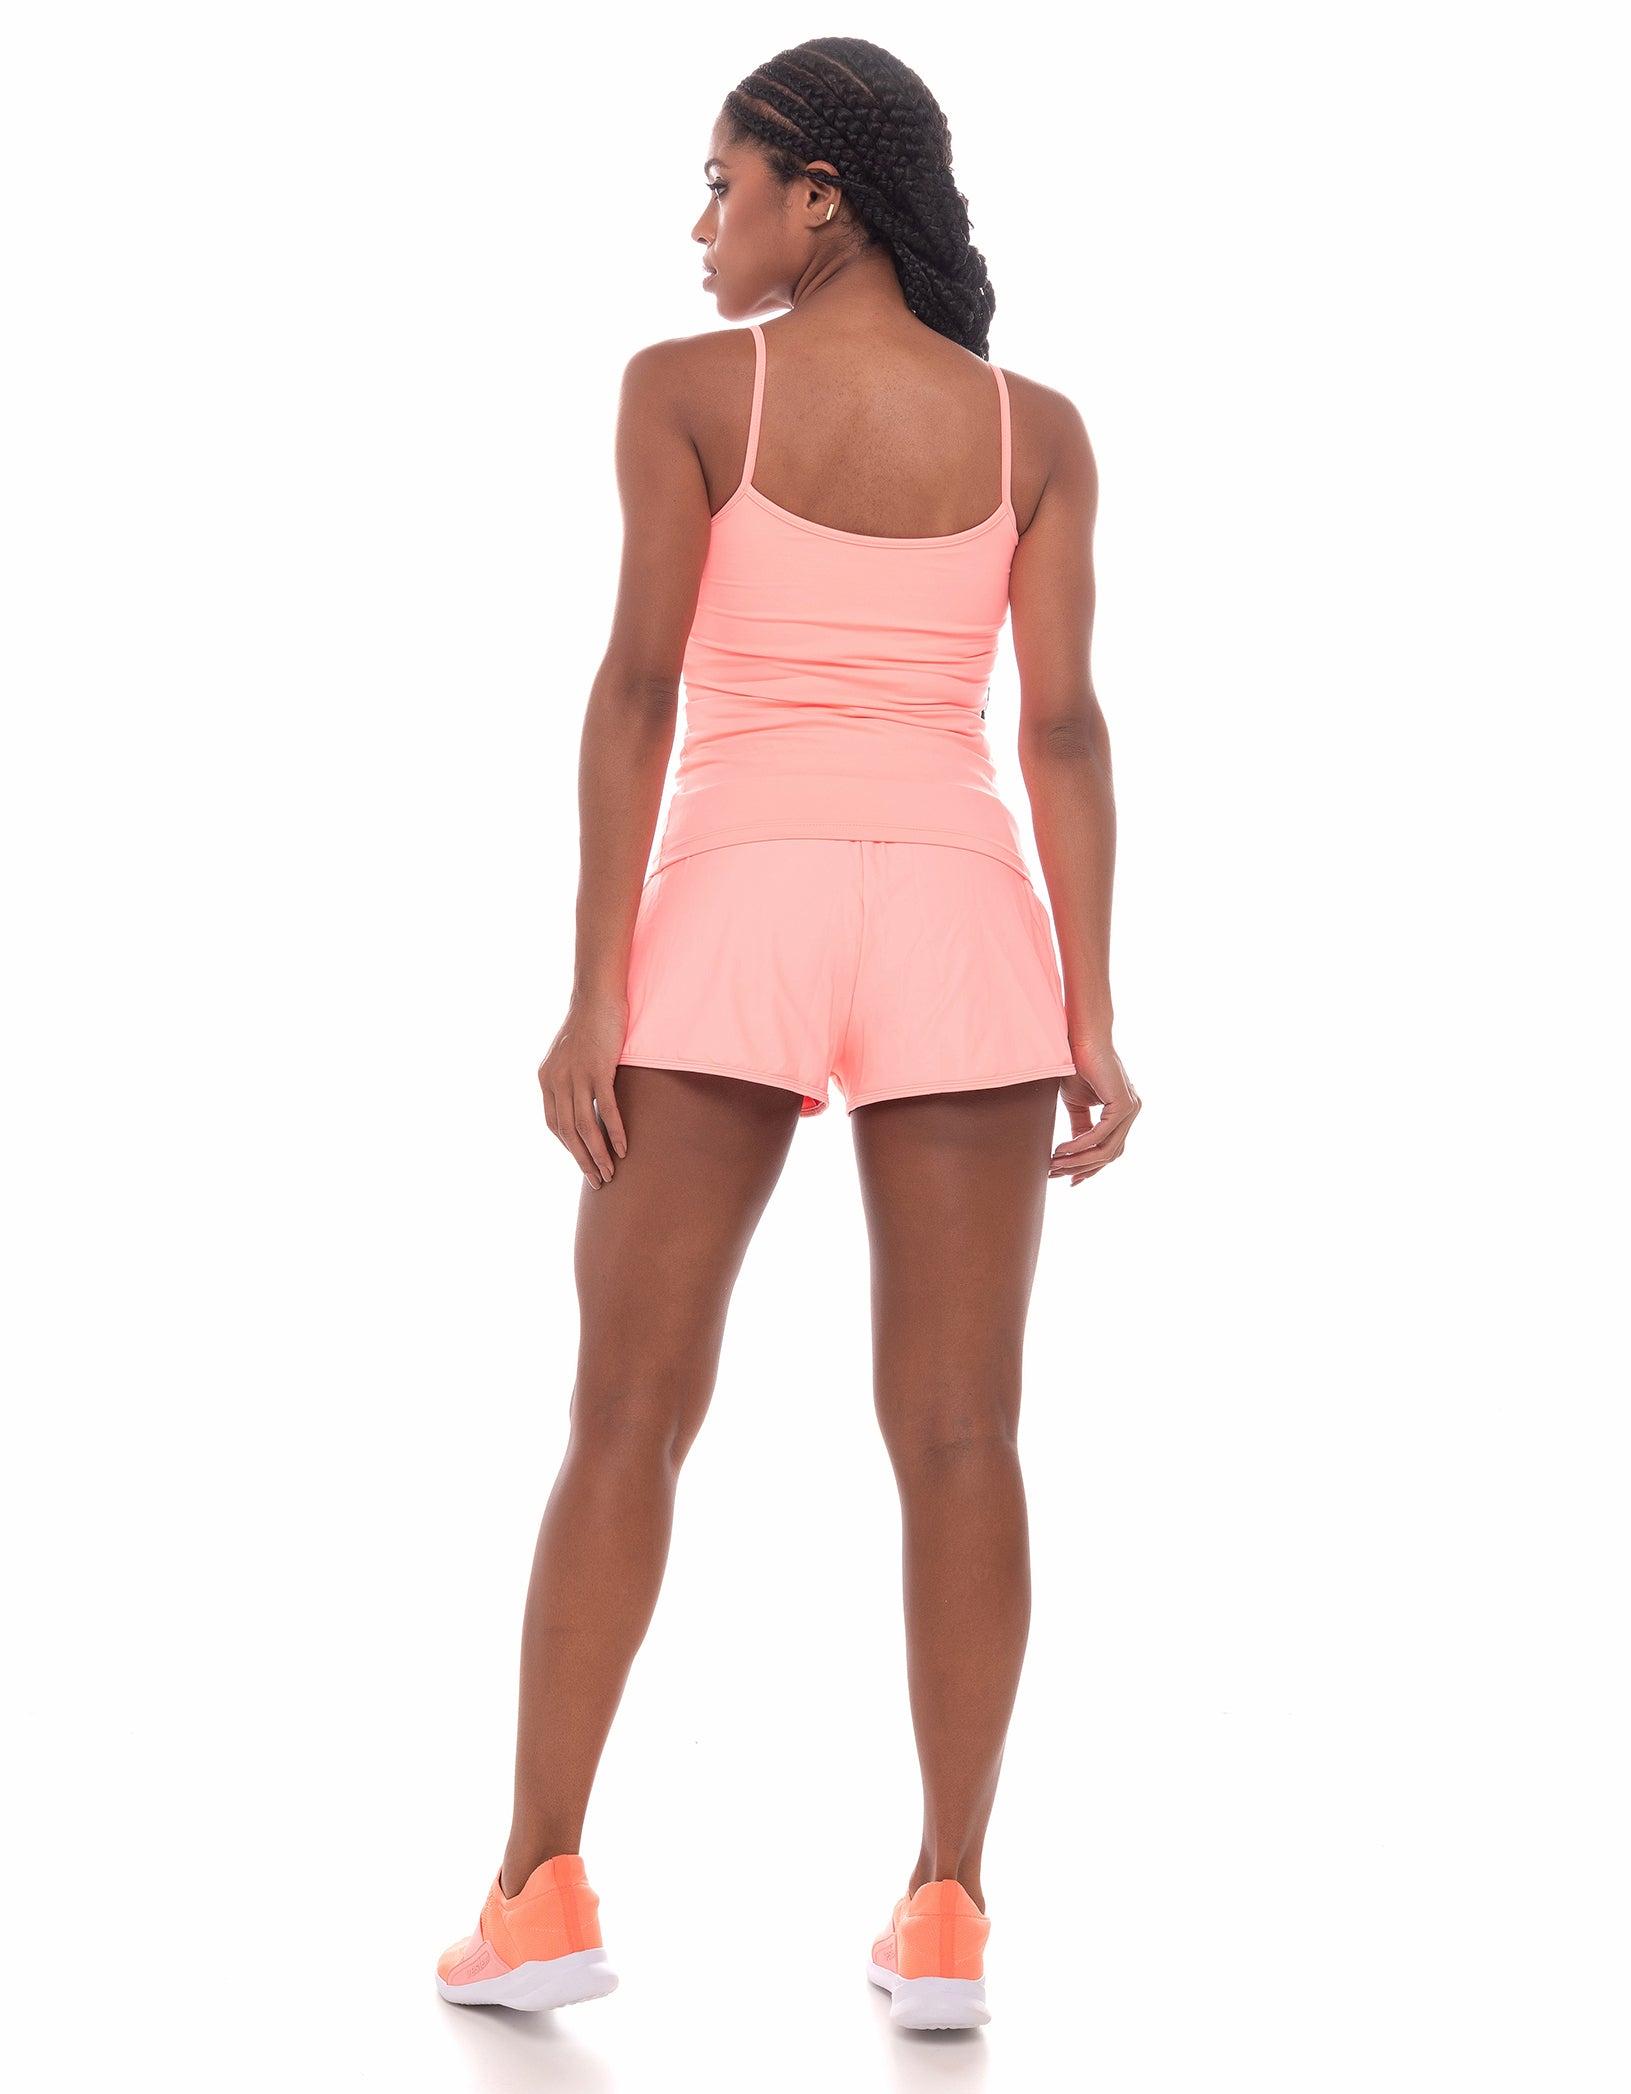 Vestem - Thin Strap Tank Shirt Top Bulge Coral Neon Orange - REG53.C0247